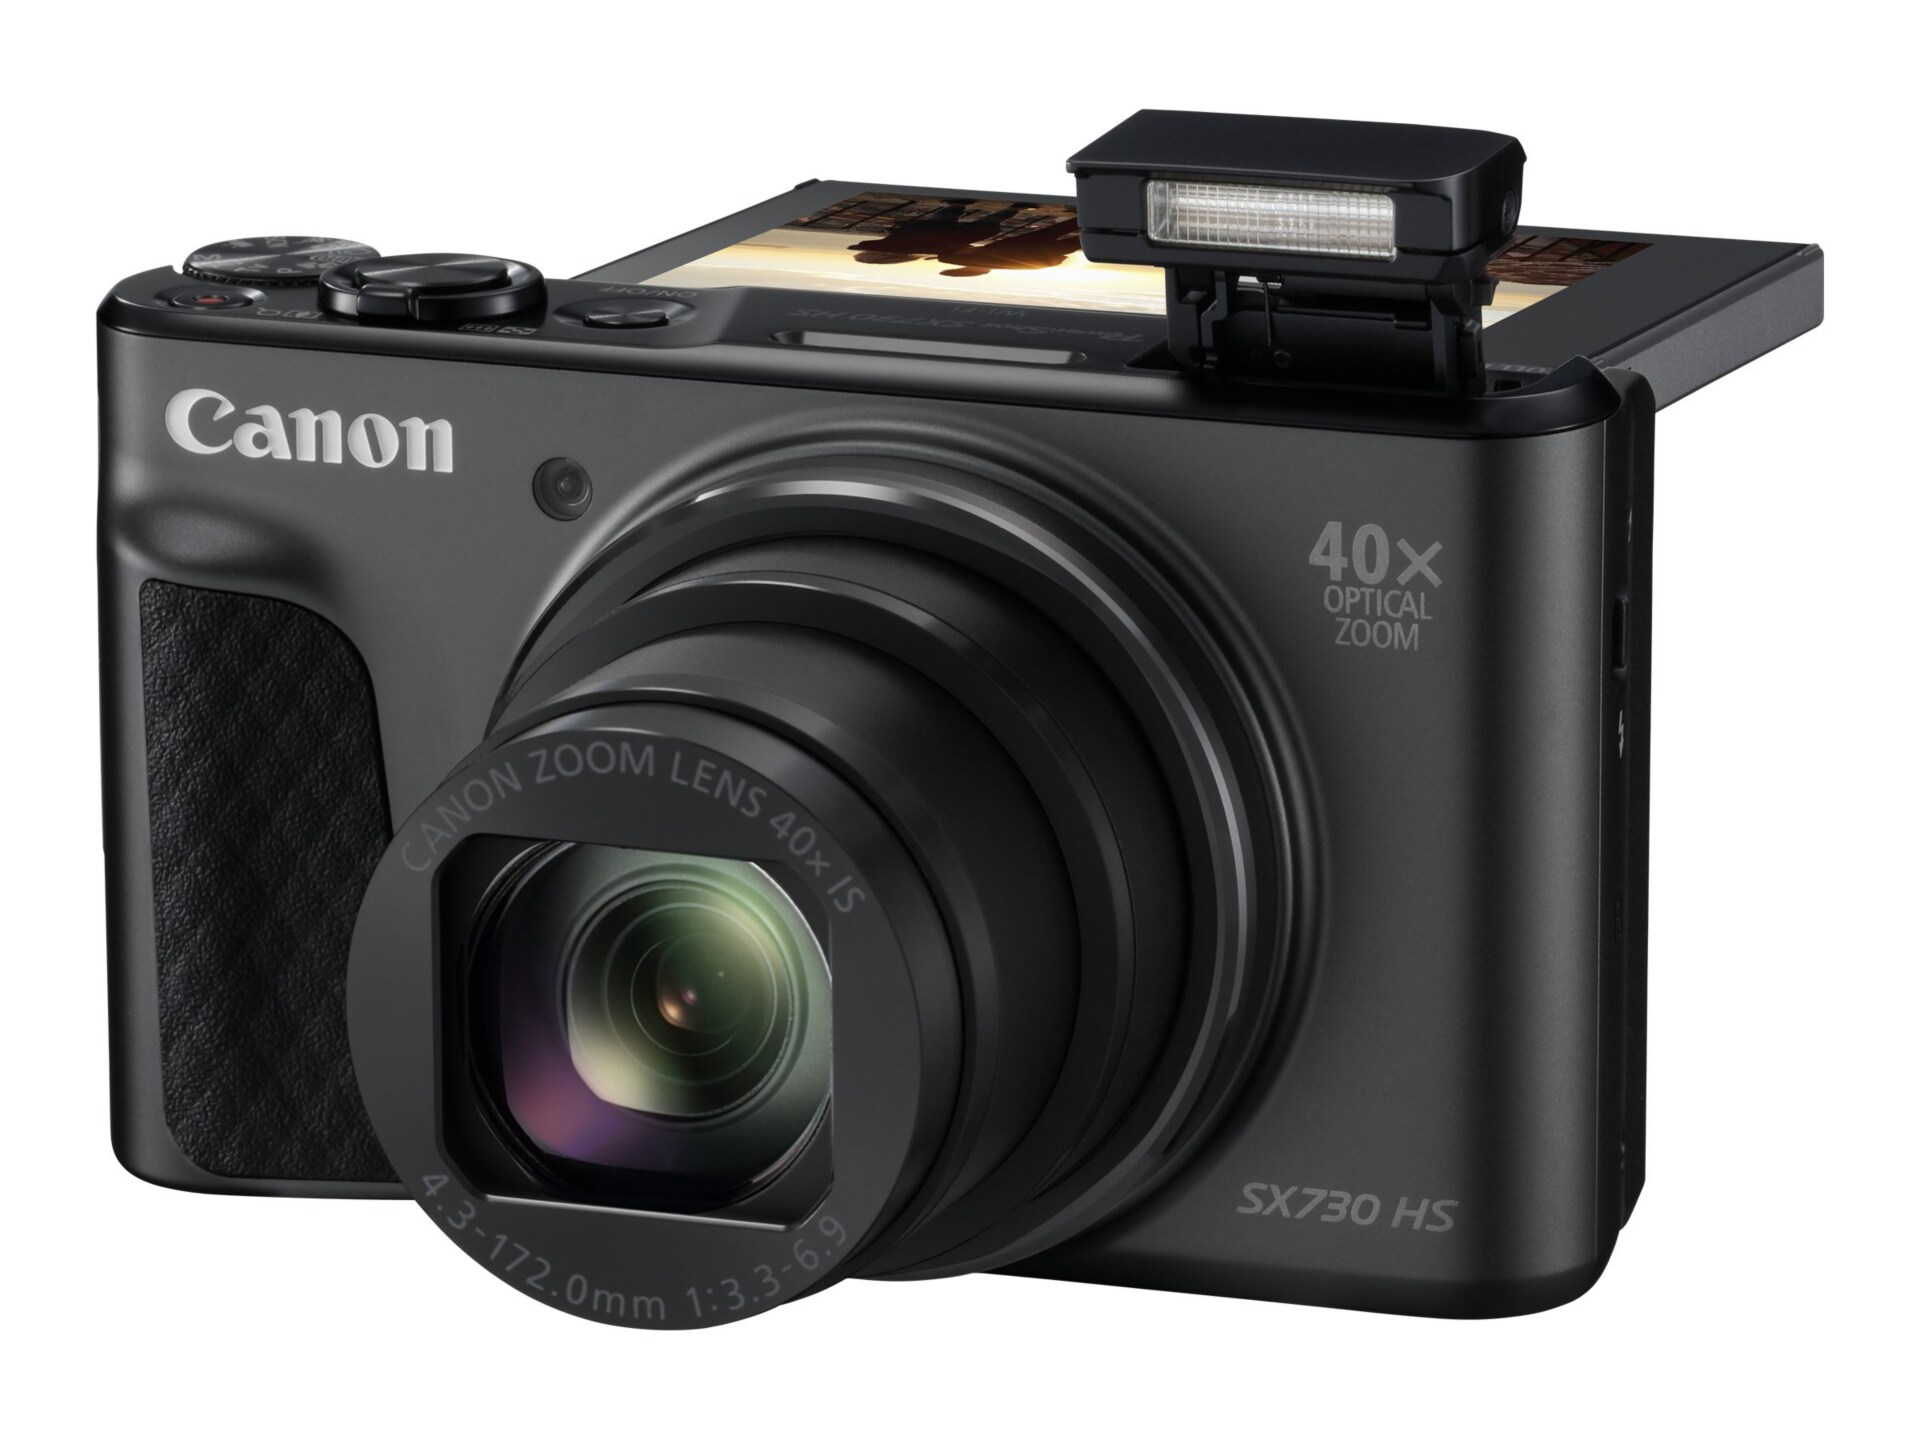 Canon PowerShot SX730 HS - digital camera